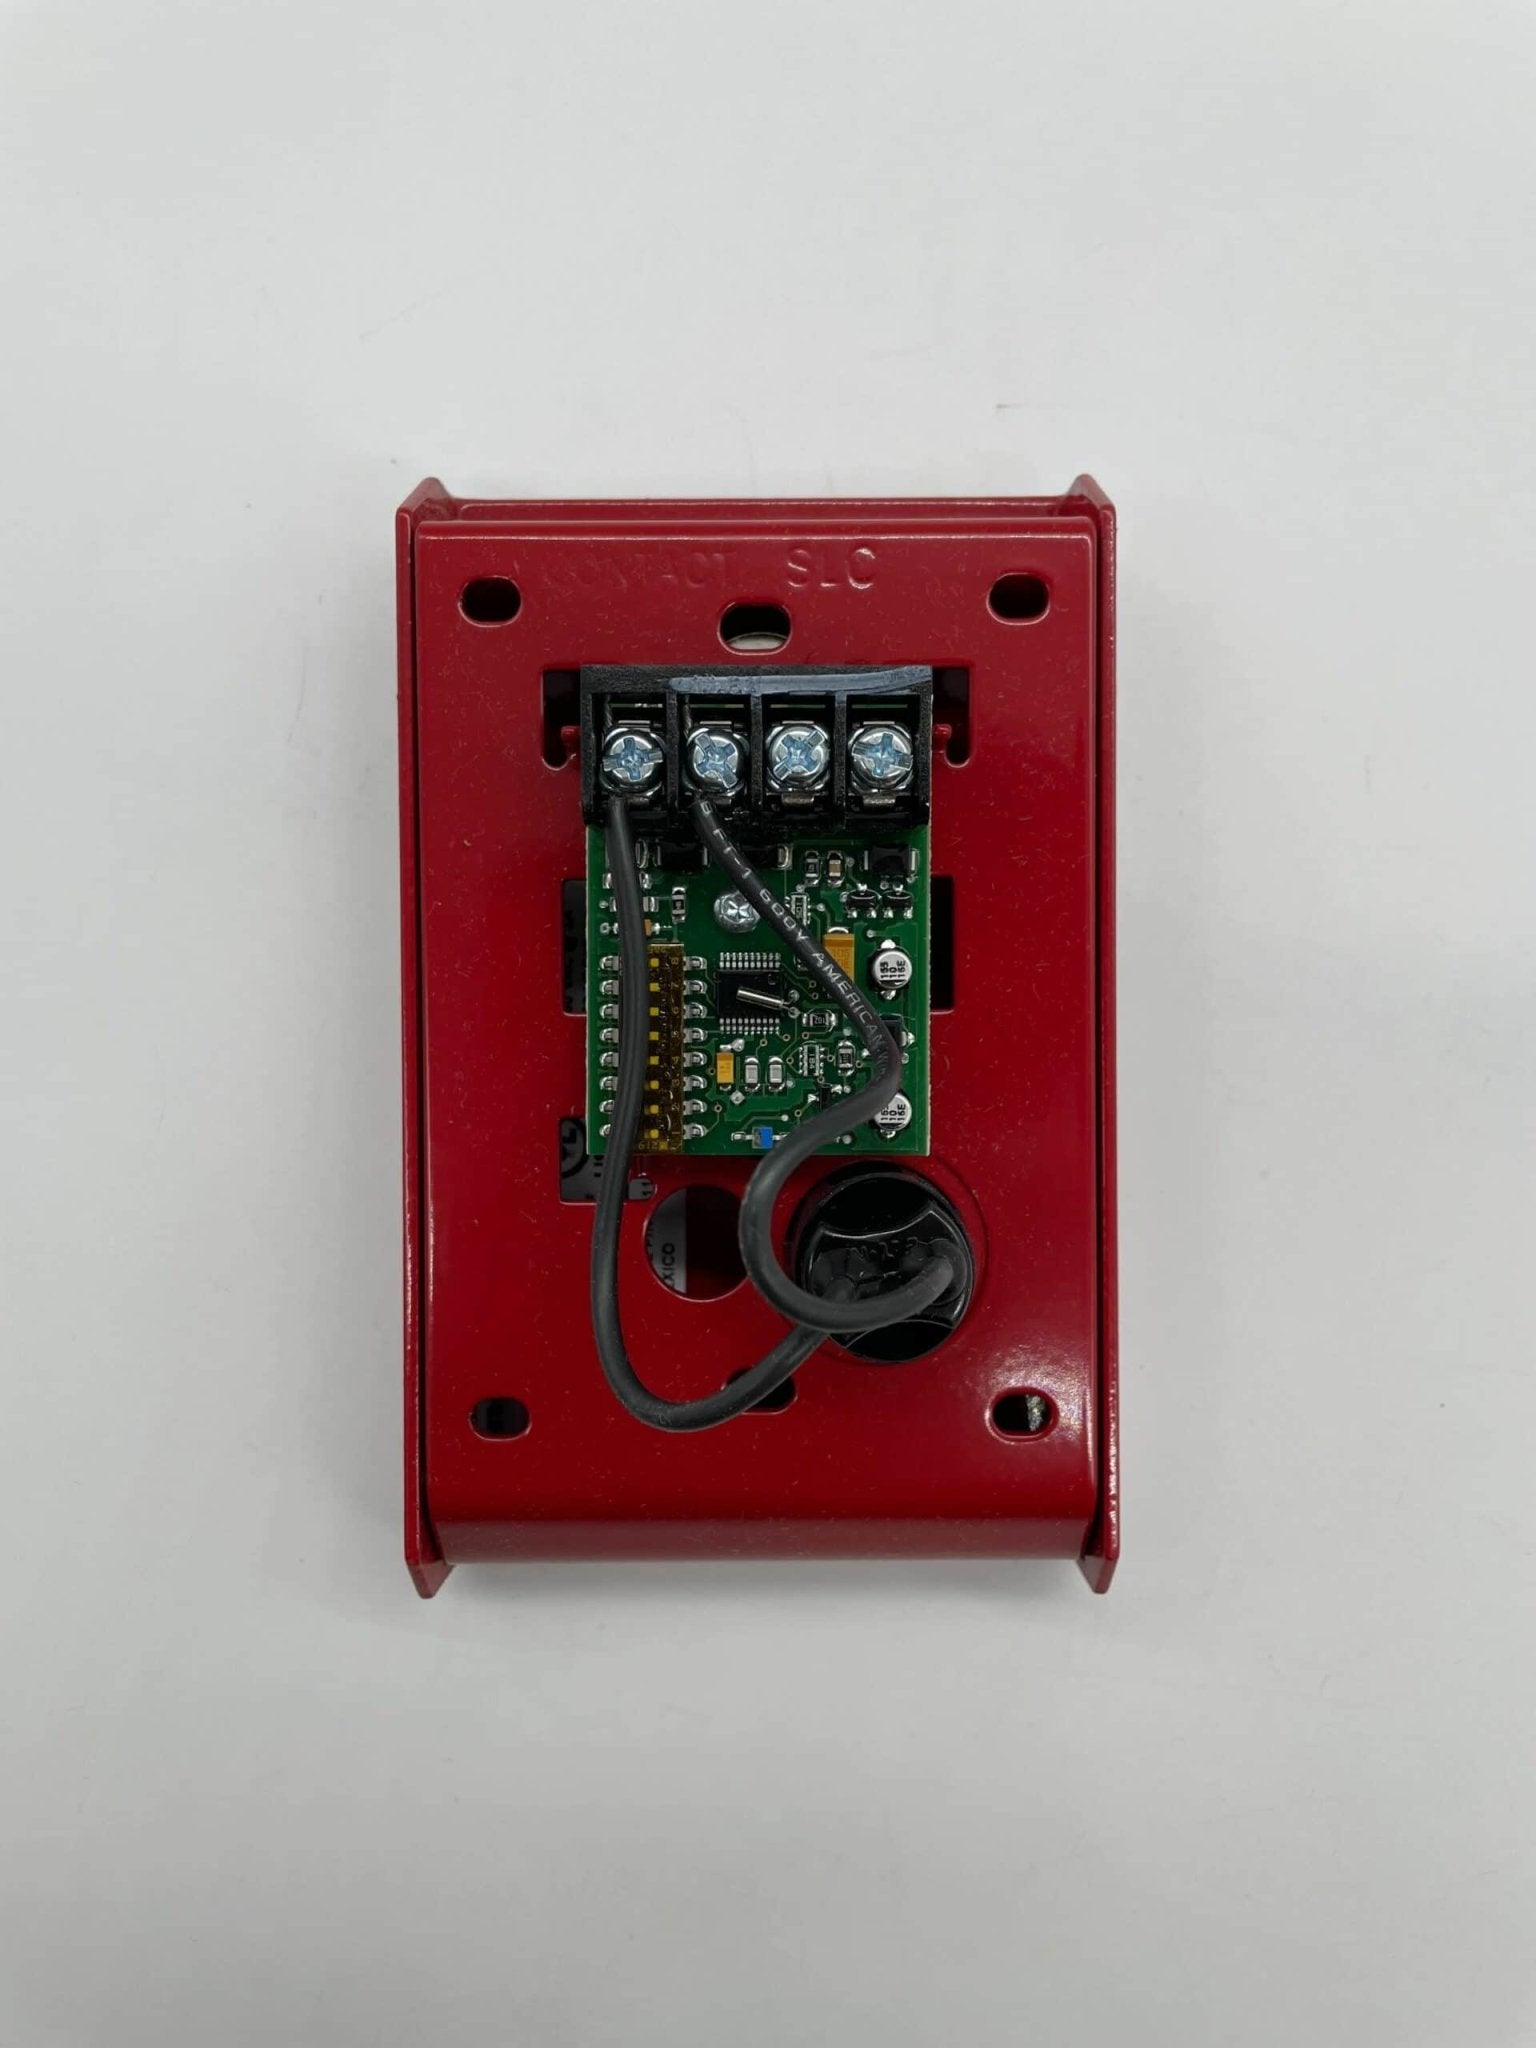 Silent Knight SD500-PSDA Addressable Station - The Fire Alarm Supplier